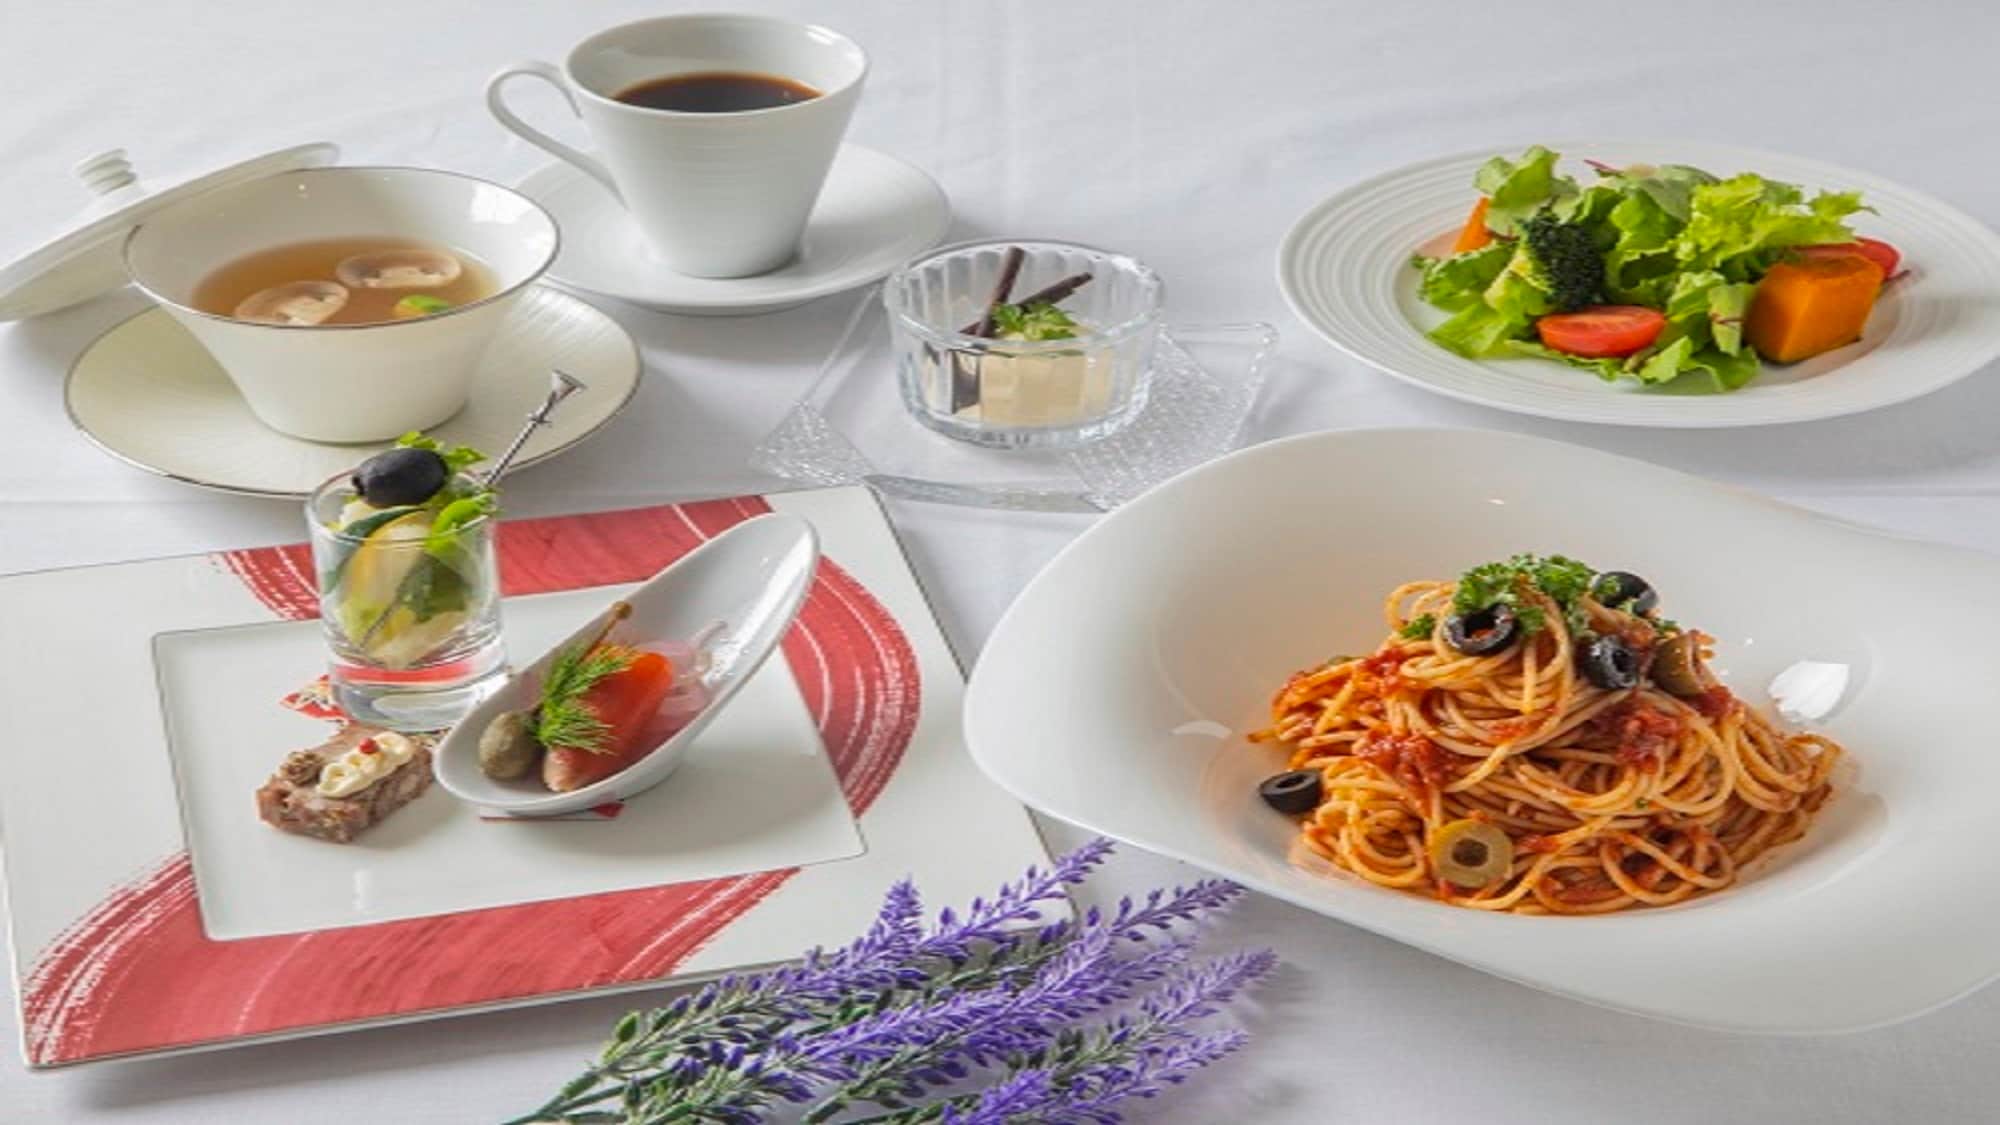 ■ You can choose your favorite menu from 3 types of pasta menu [Pasta set] Image